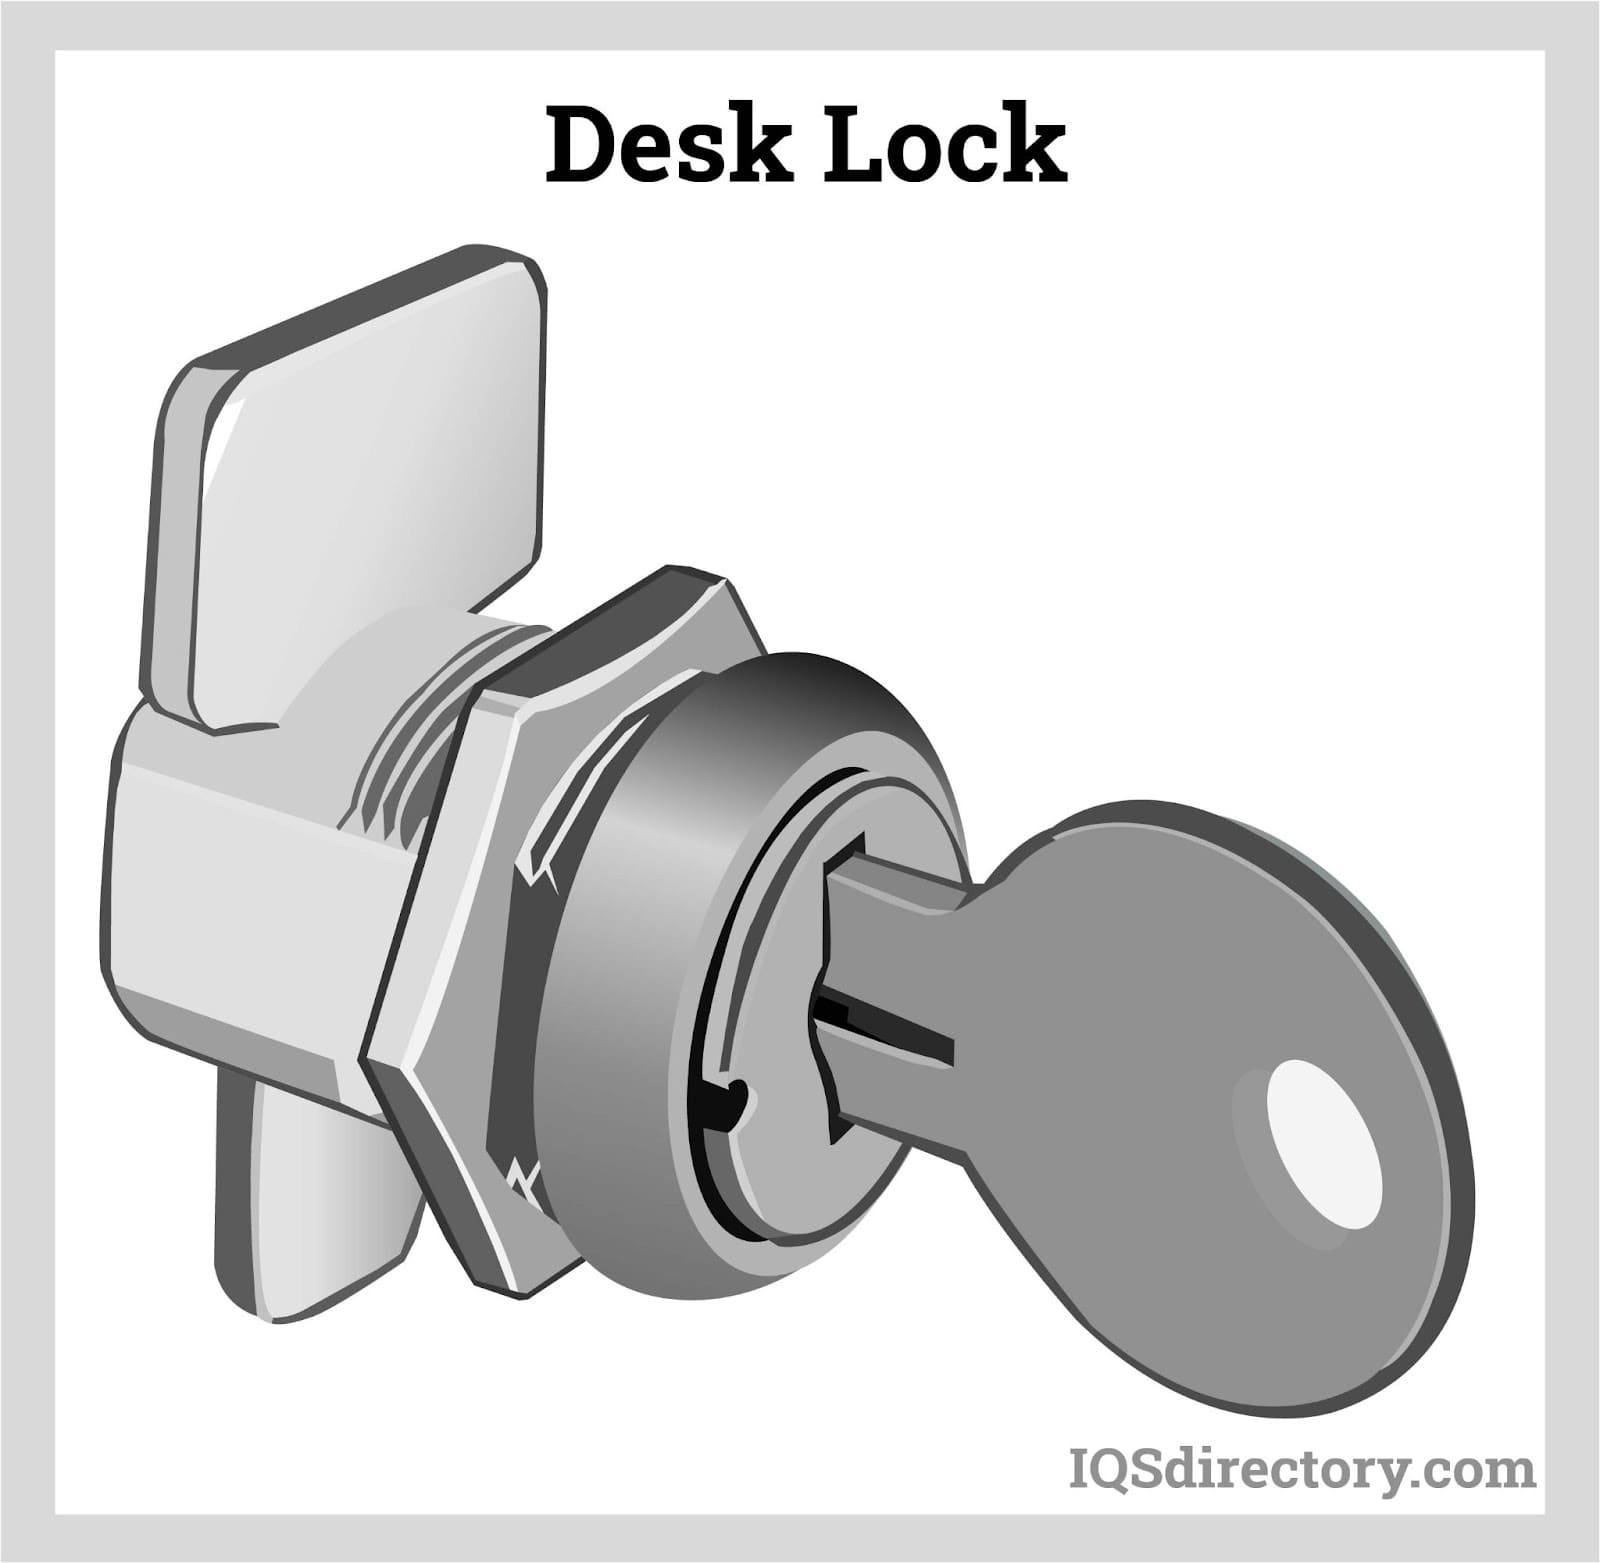 Desk Lock